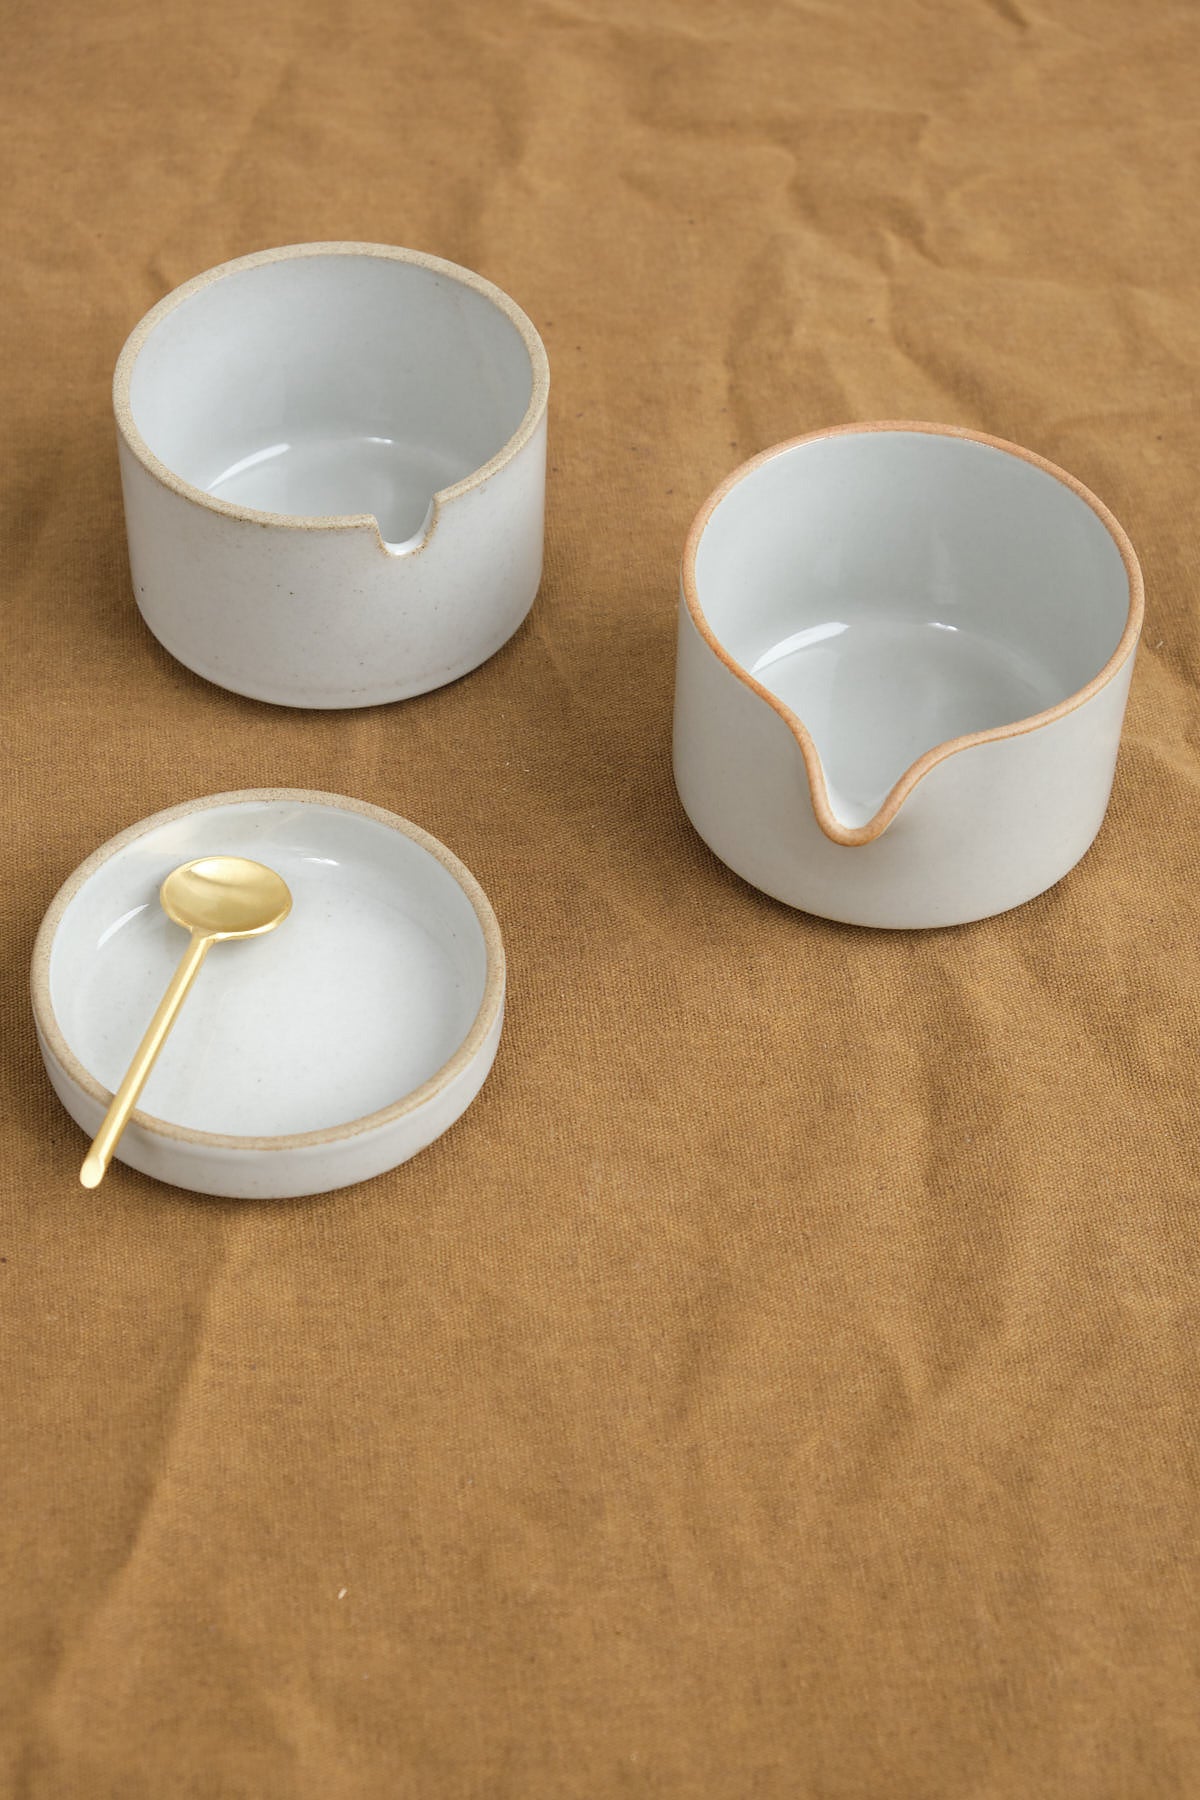 Hasami Porcelain Sugar Pot, Lid and Creamer in Gloss Gray